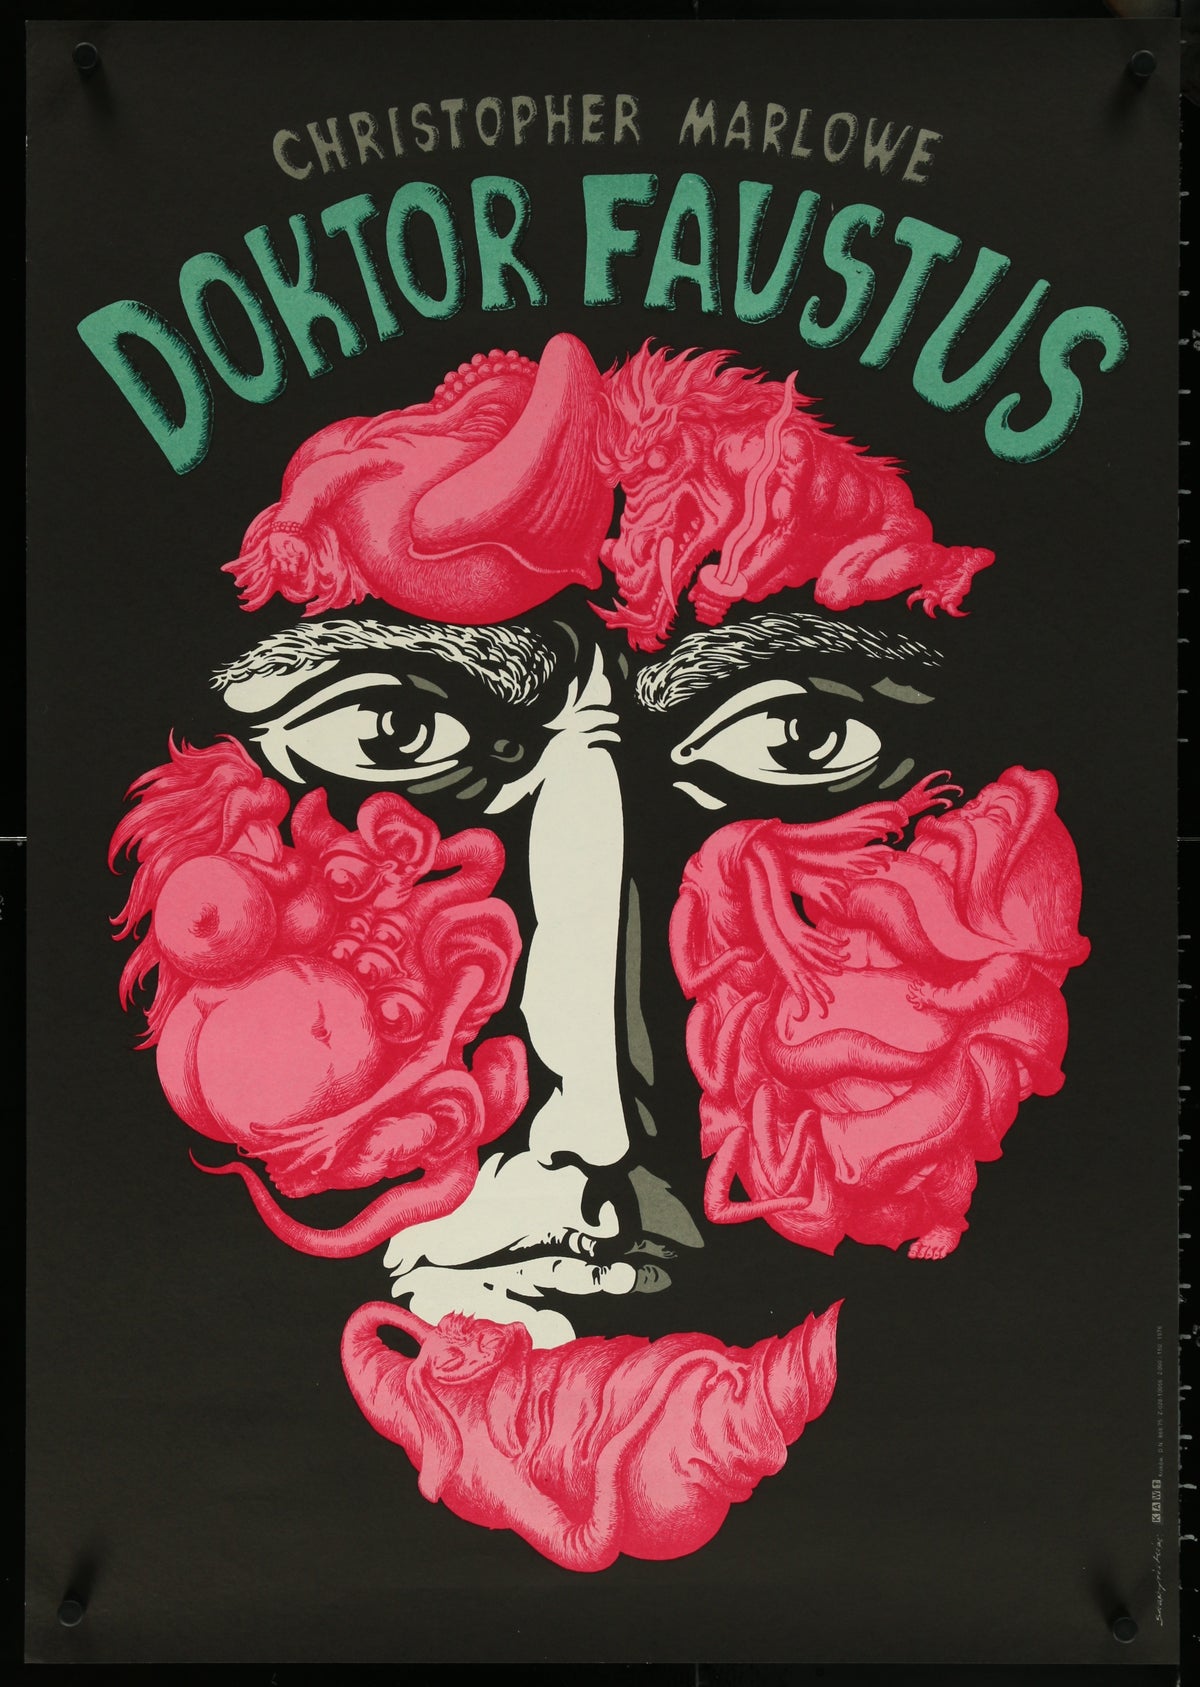 Doktor Faustas - Authentic Vintage Poster